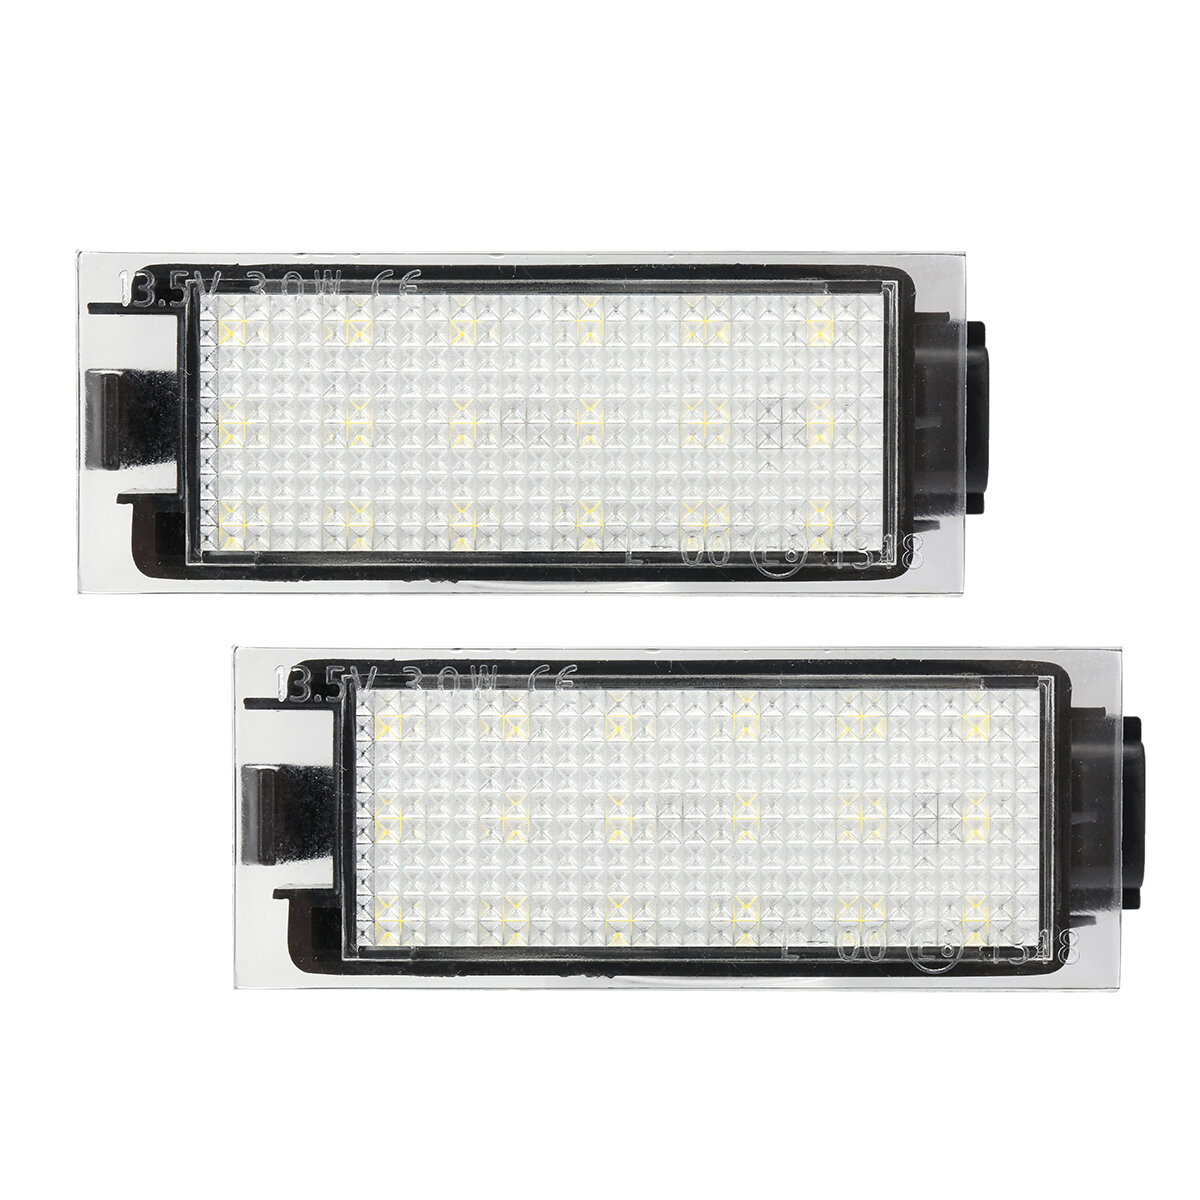 Pair 12V LED License Number Plate Lights White For Renault Twingo Clio Megane Lagane